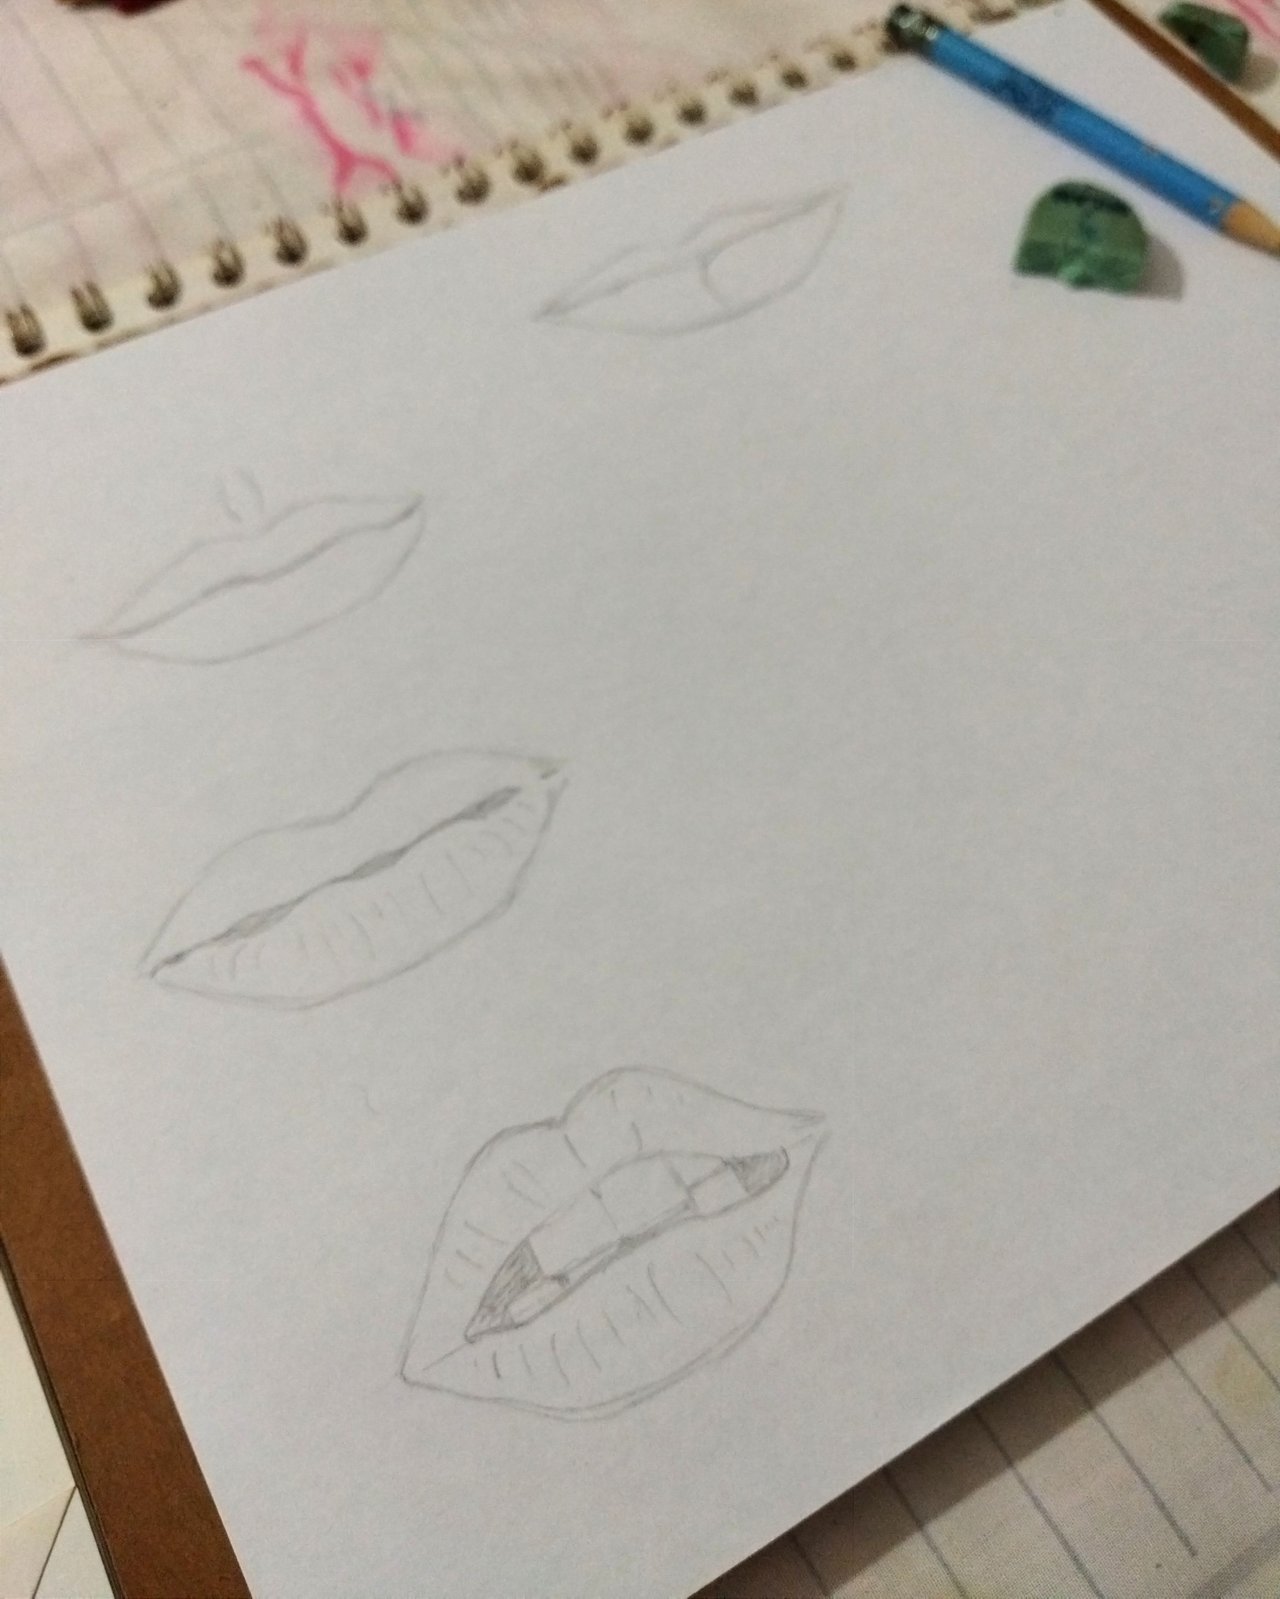 Dibujar bocas y labios